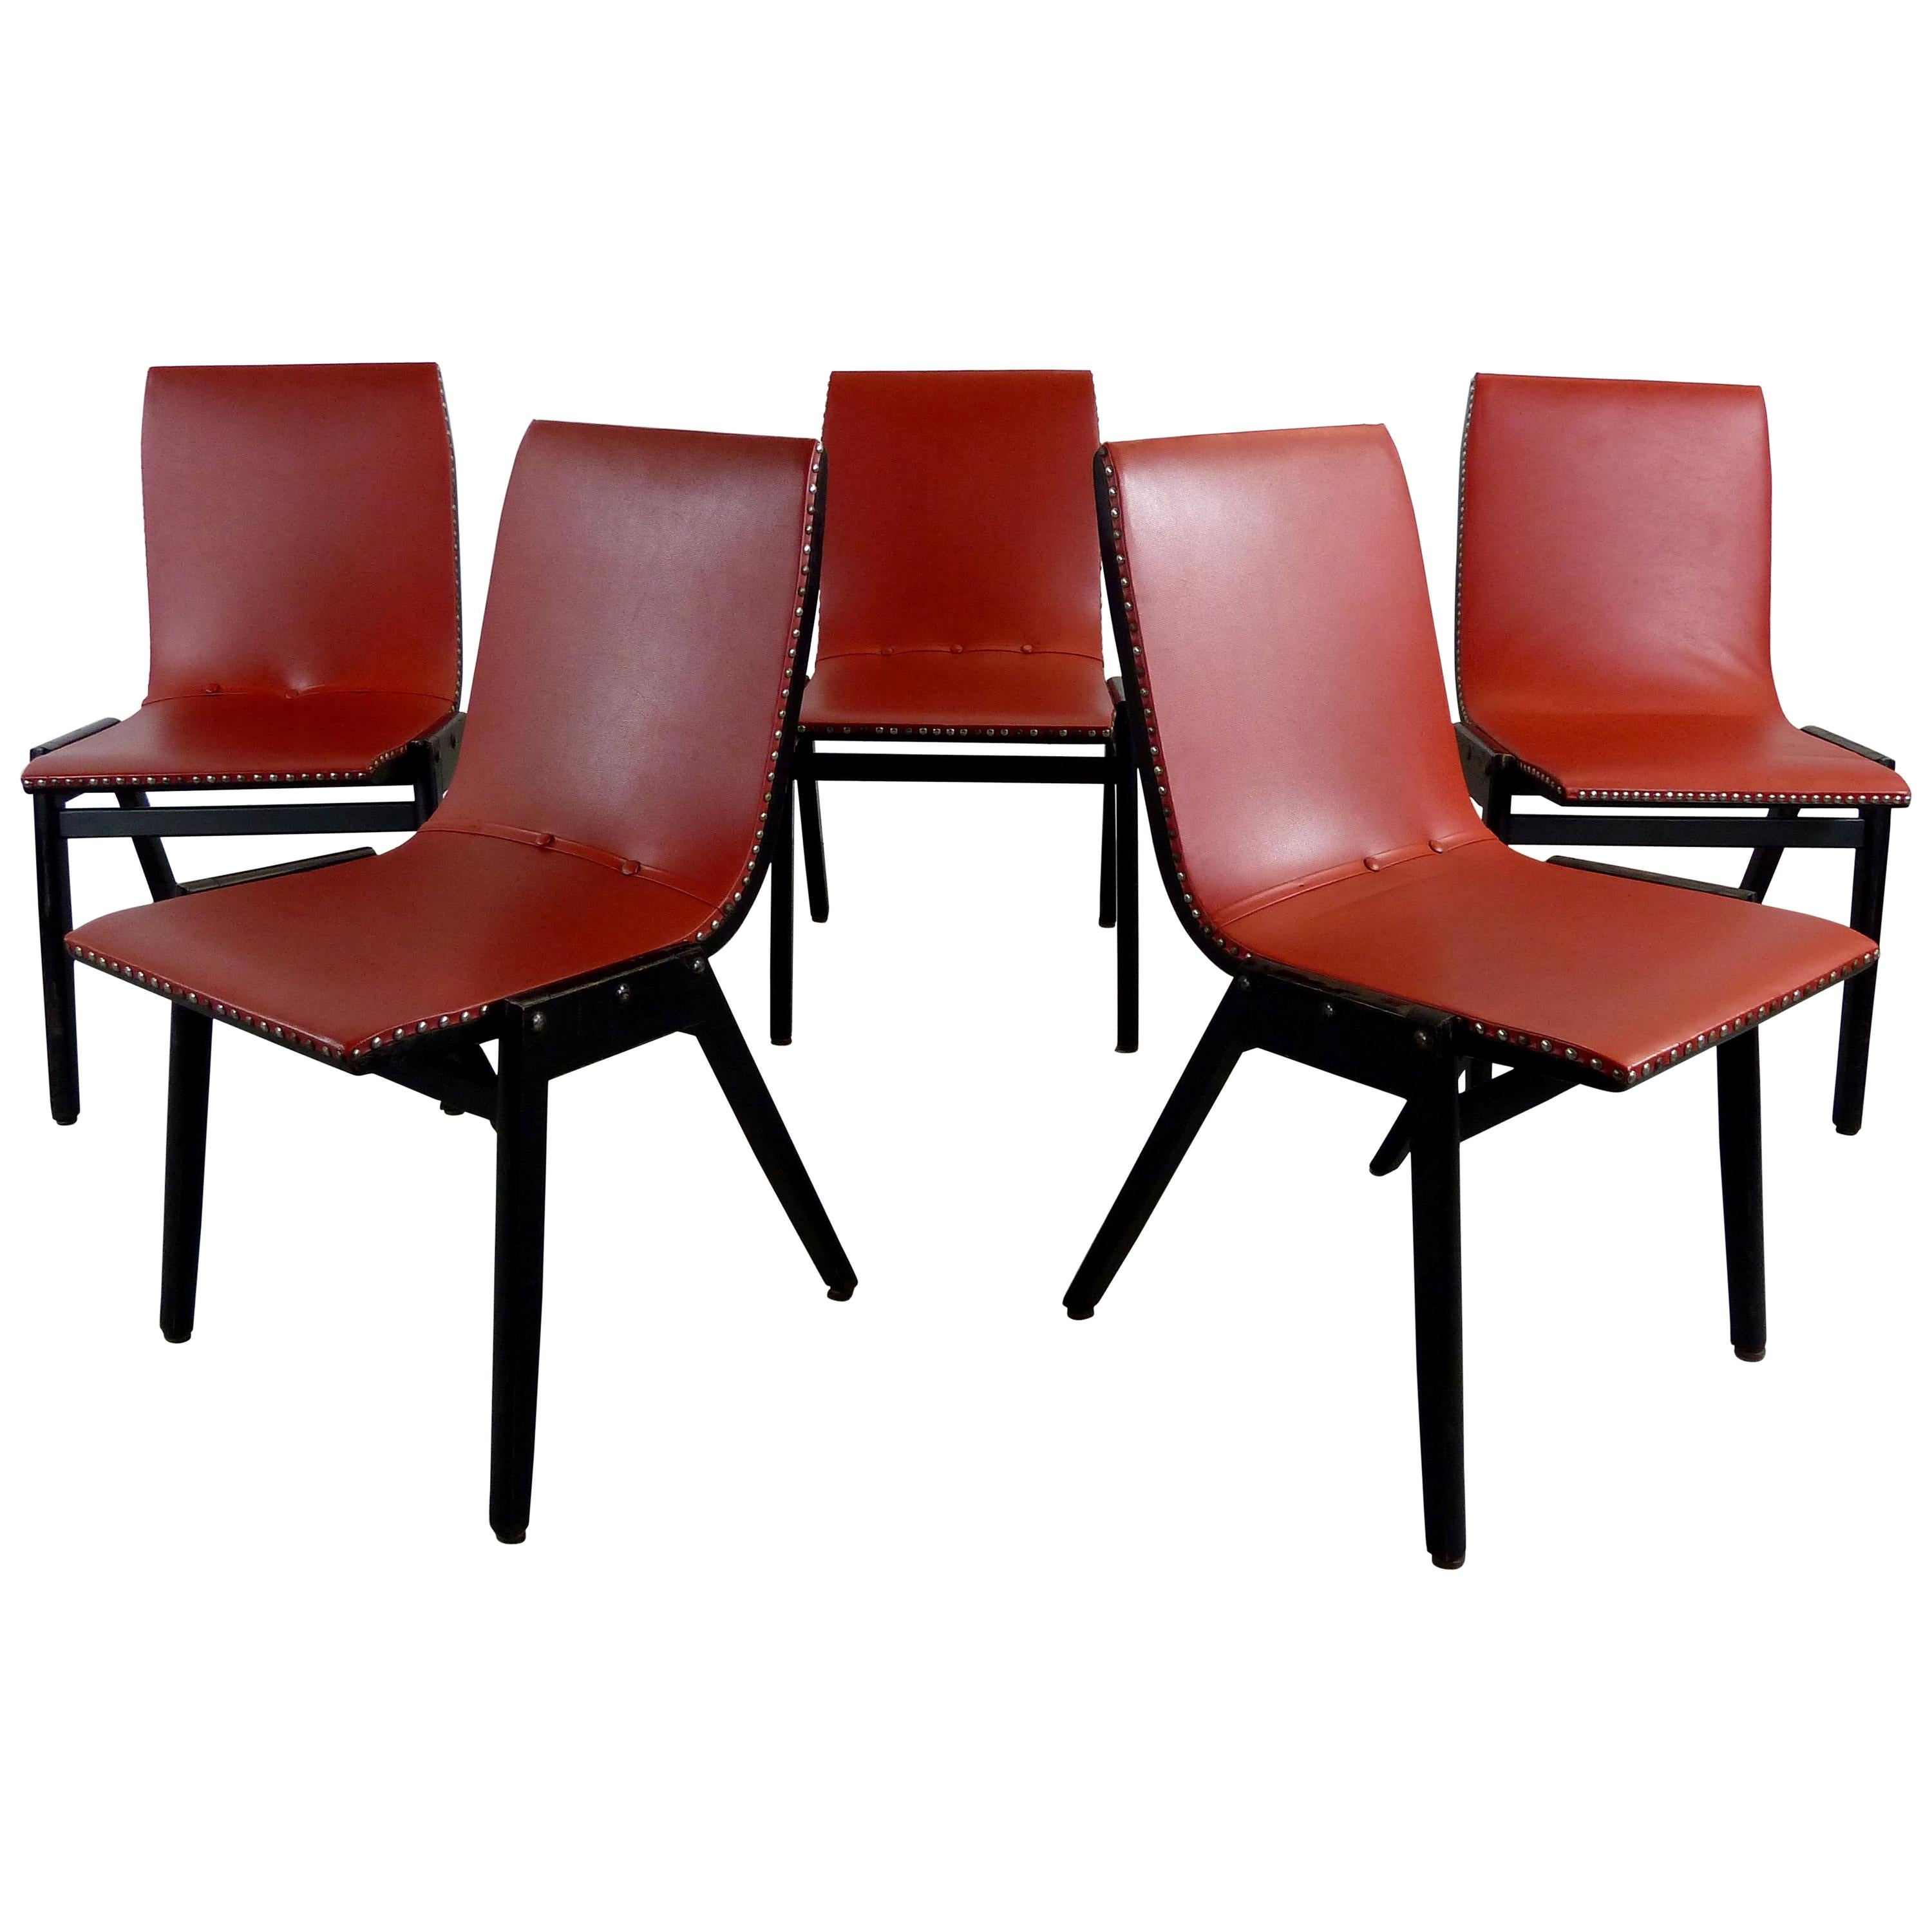 Set of 5 Midcentury Dining Chairs from Austrian Designer Roland Rainer